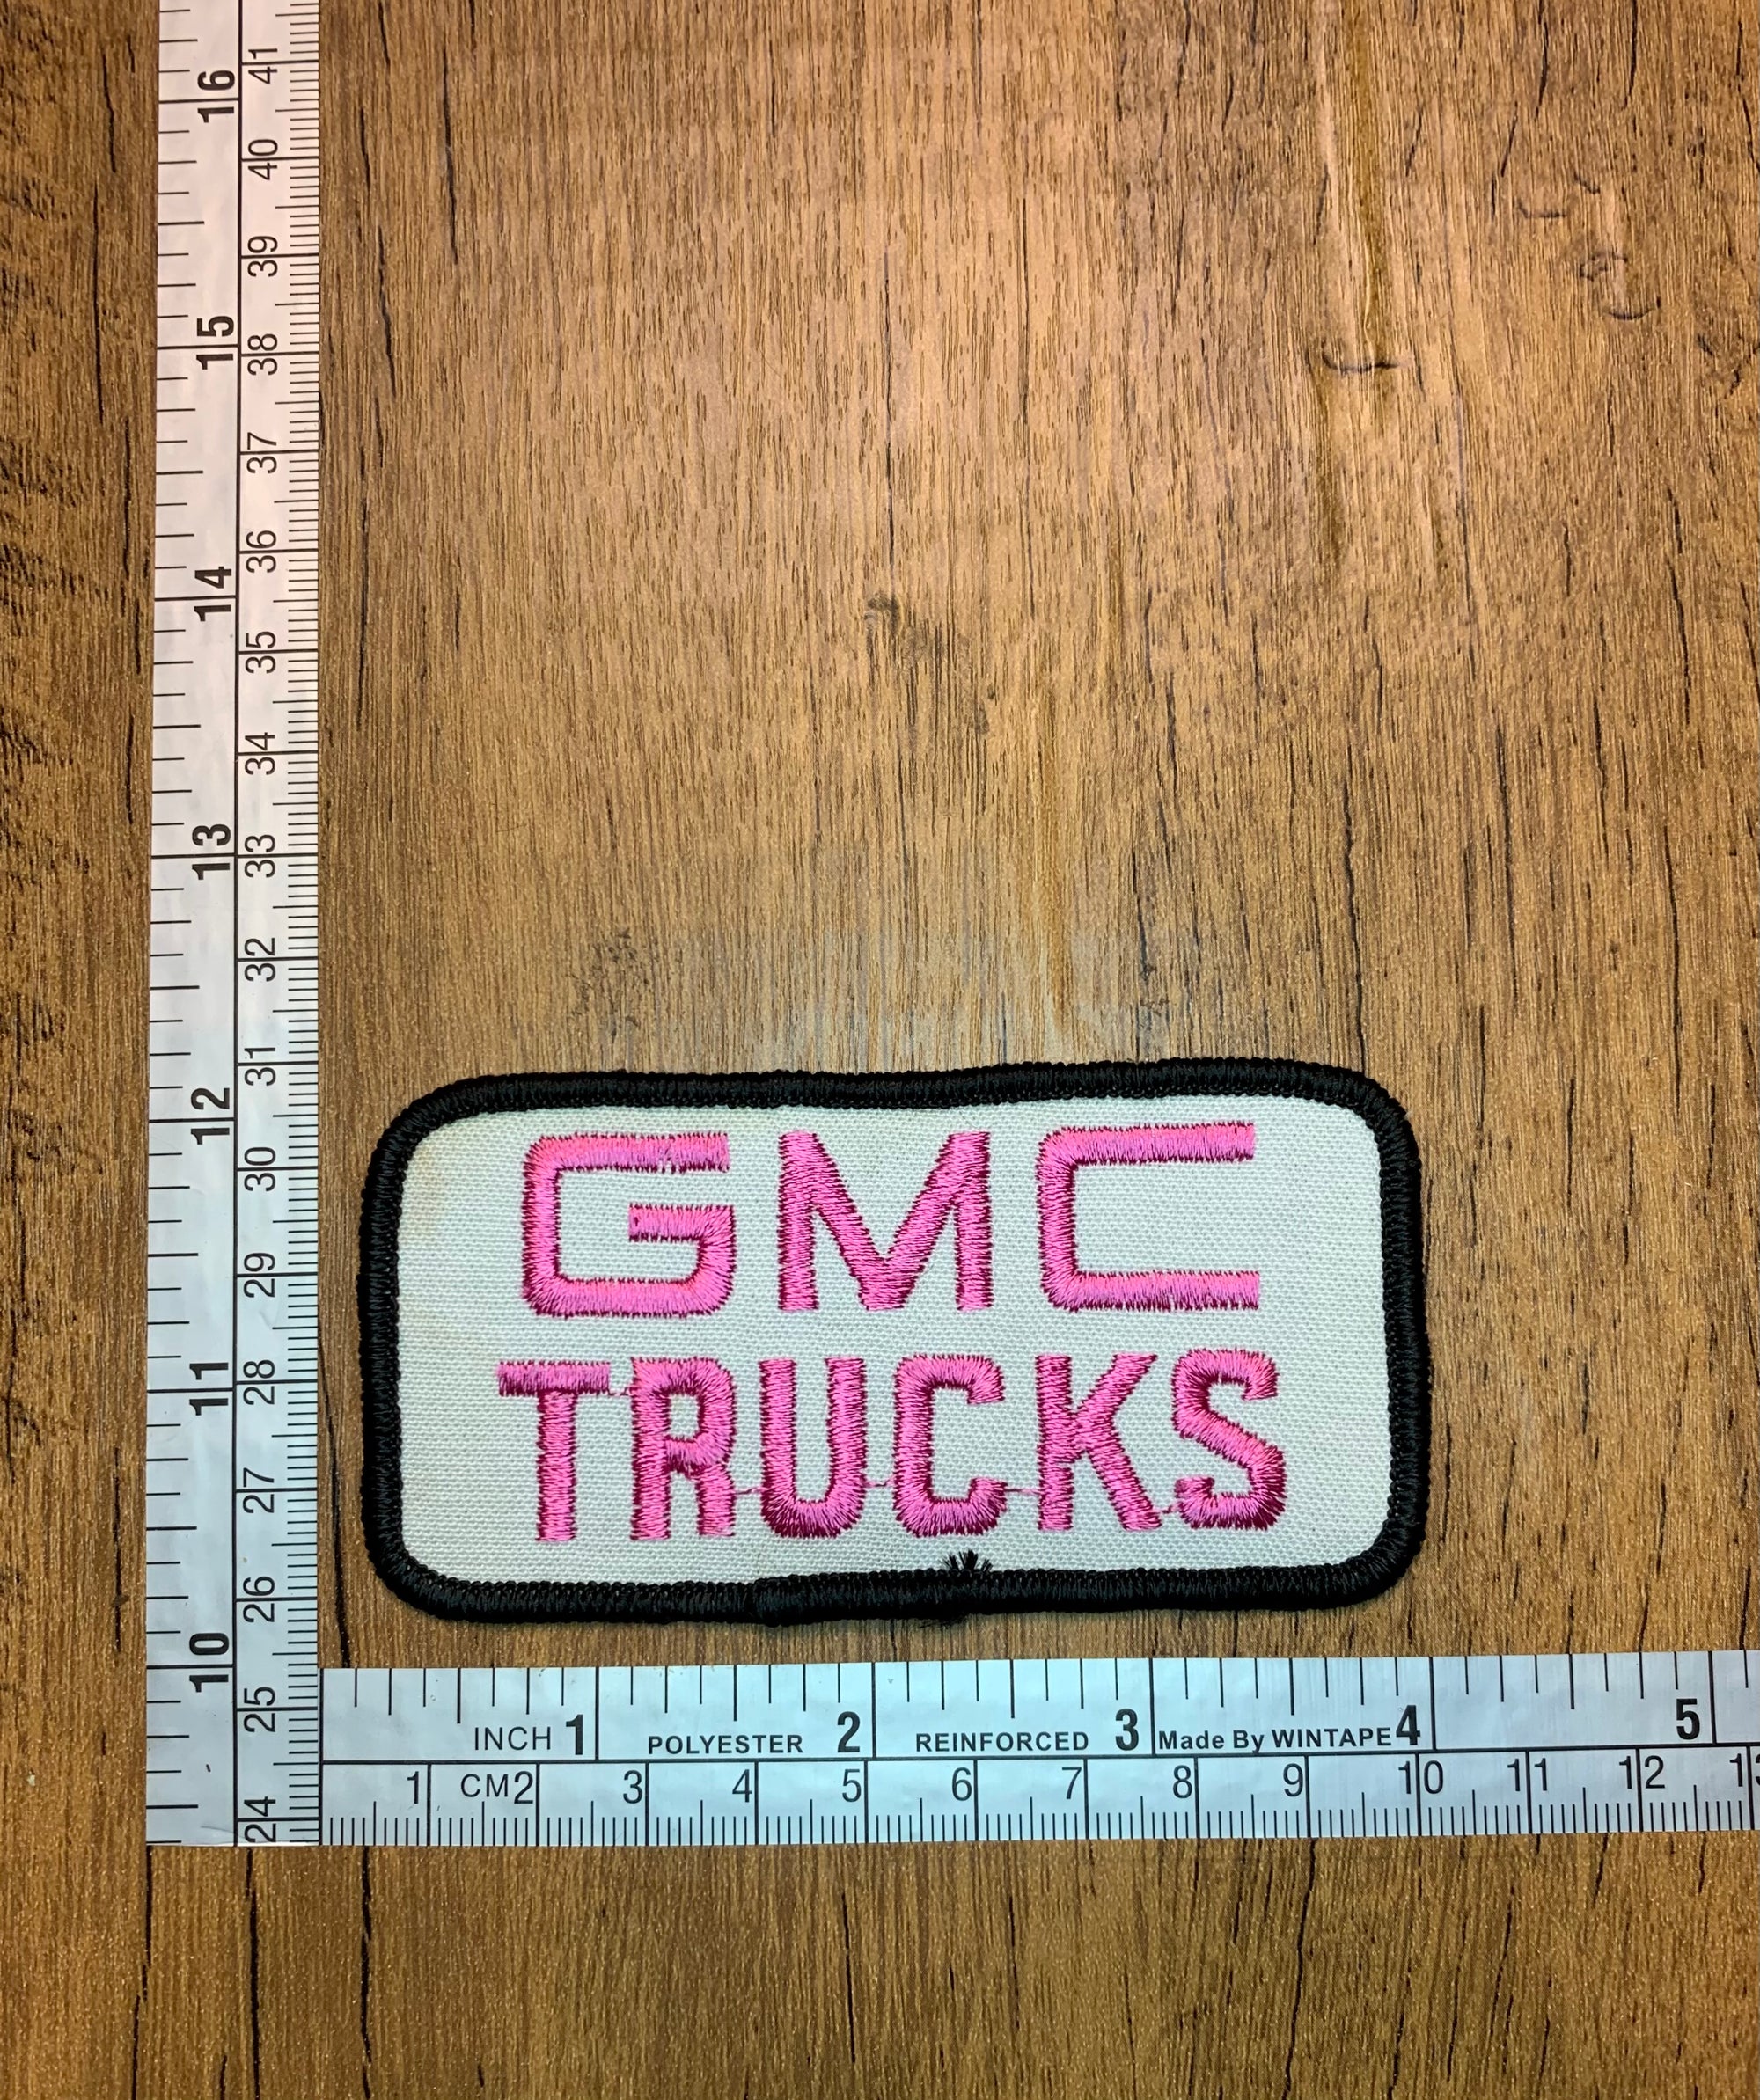 Vintage GMC Trucks